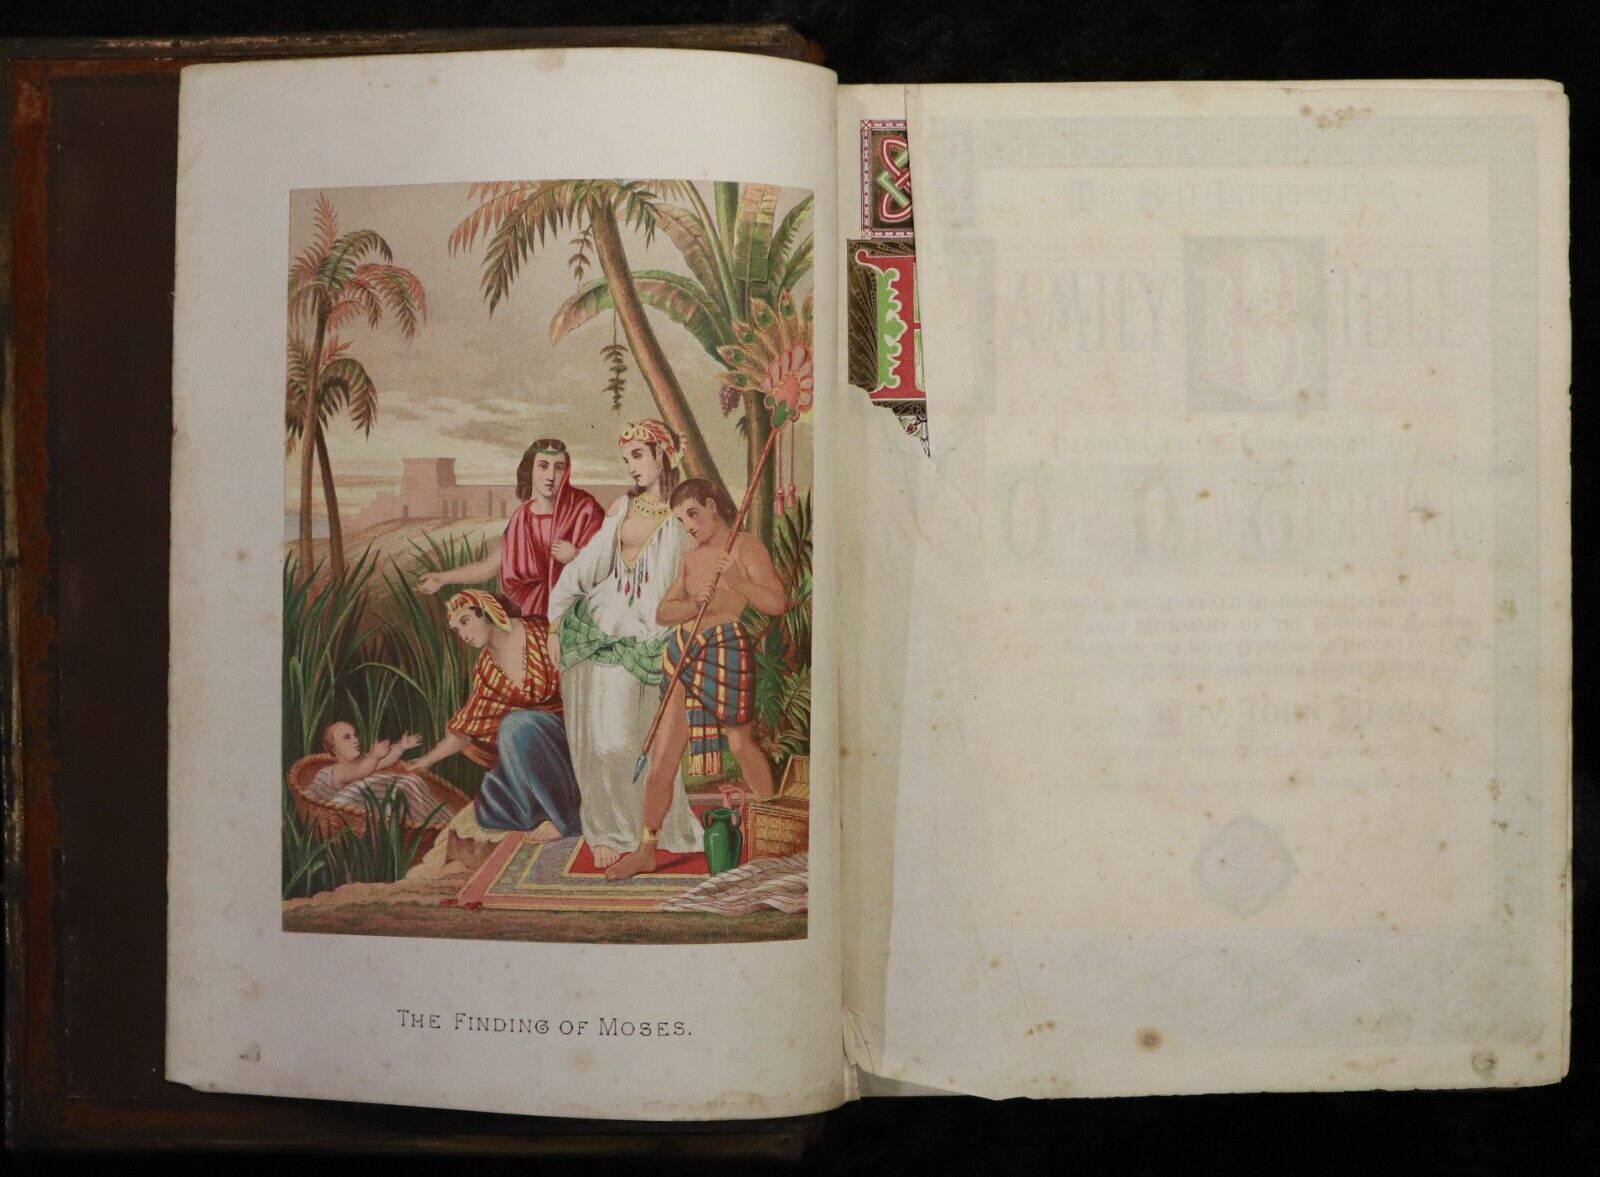 c1885 Brown's Self Interpreting Family Bible Rev J. Brown Antique Religious Book